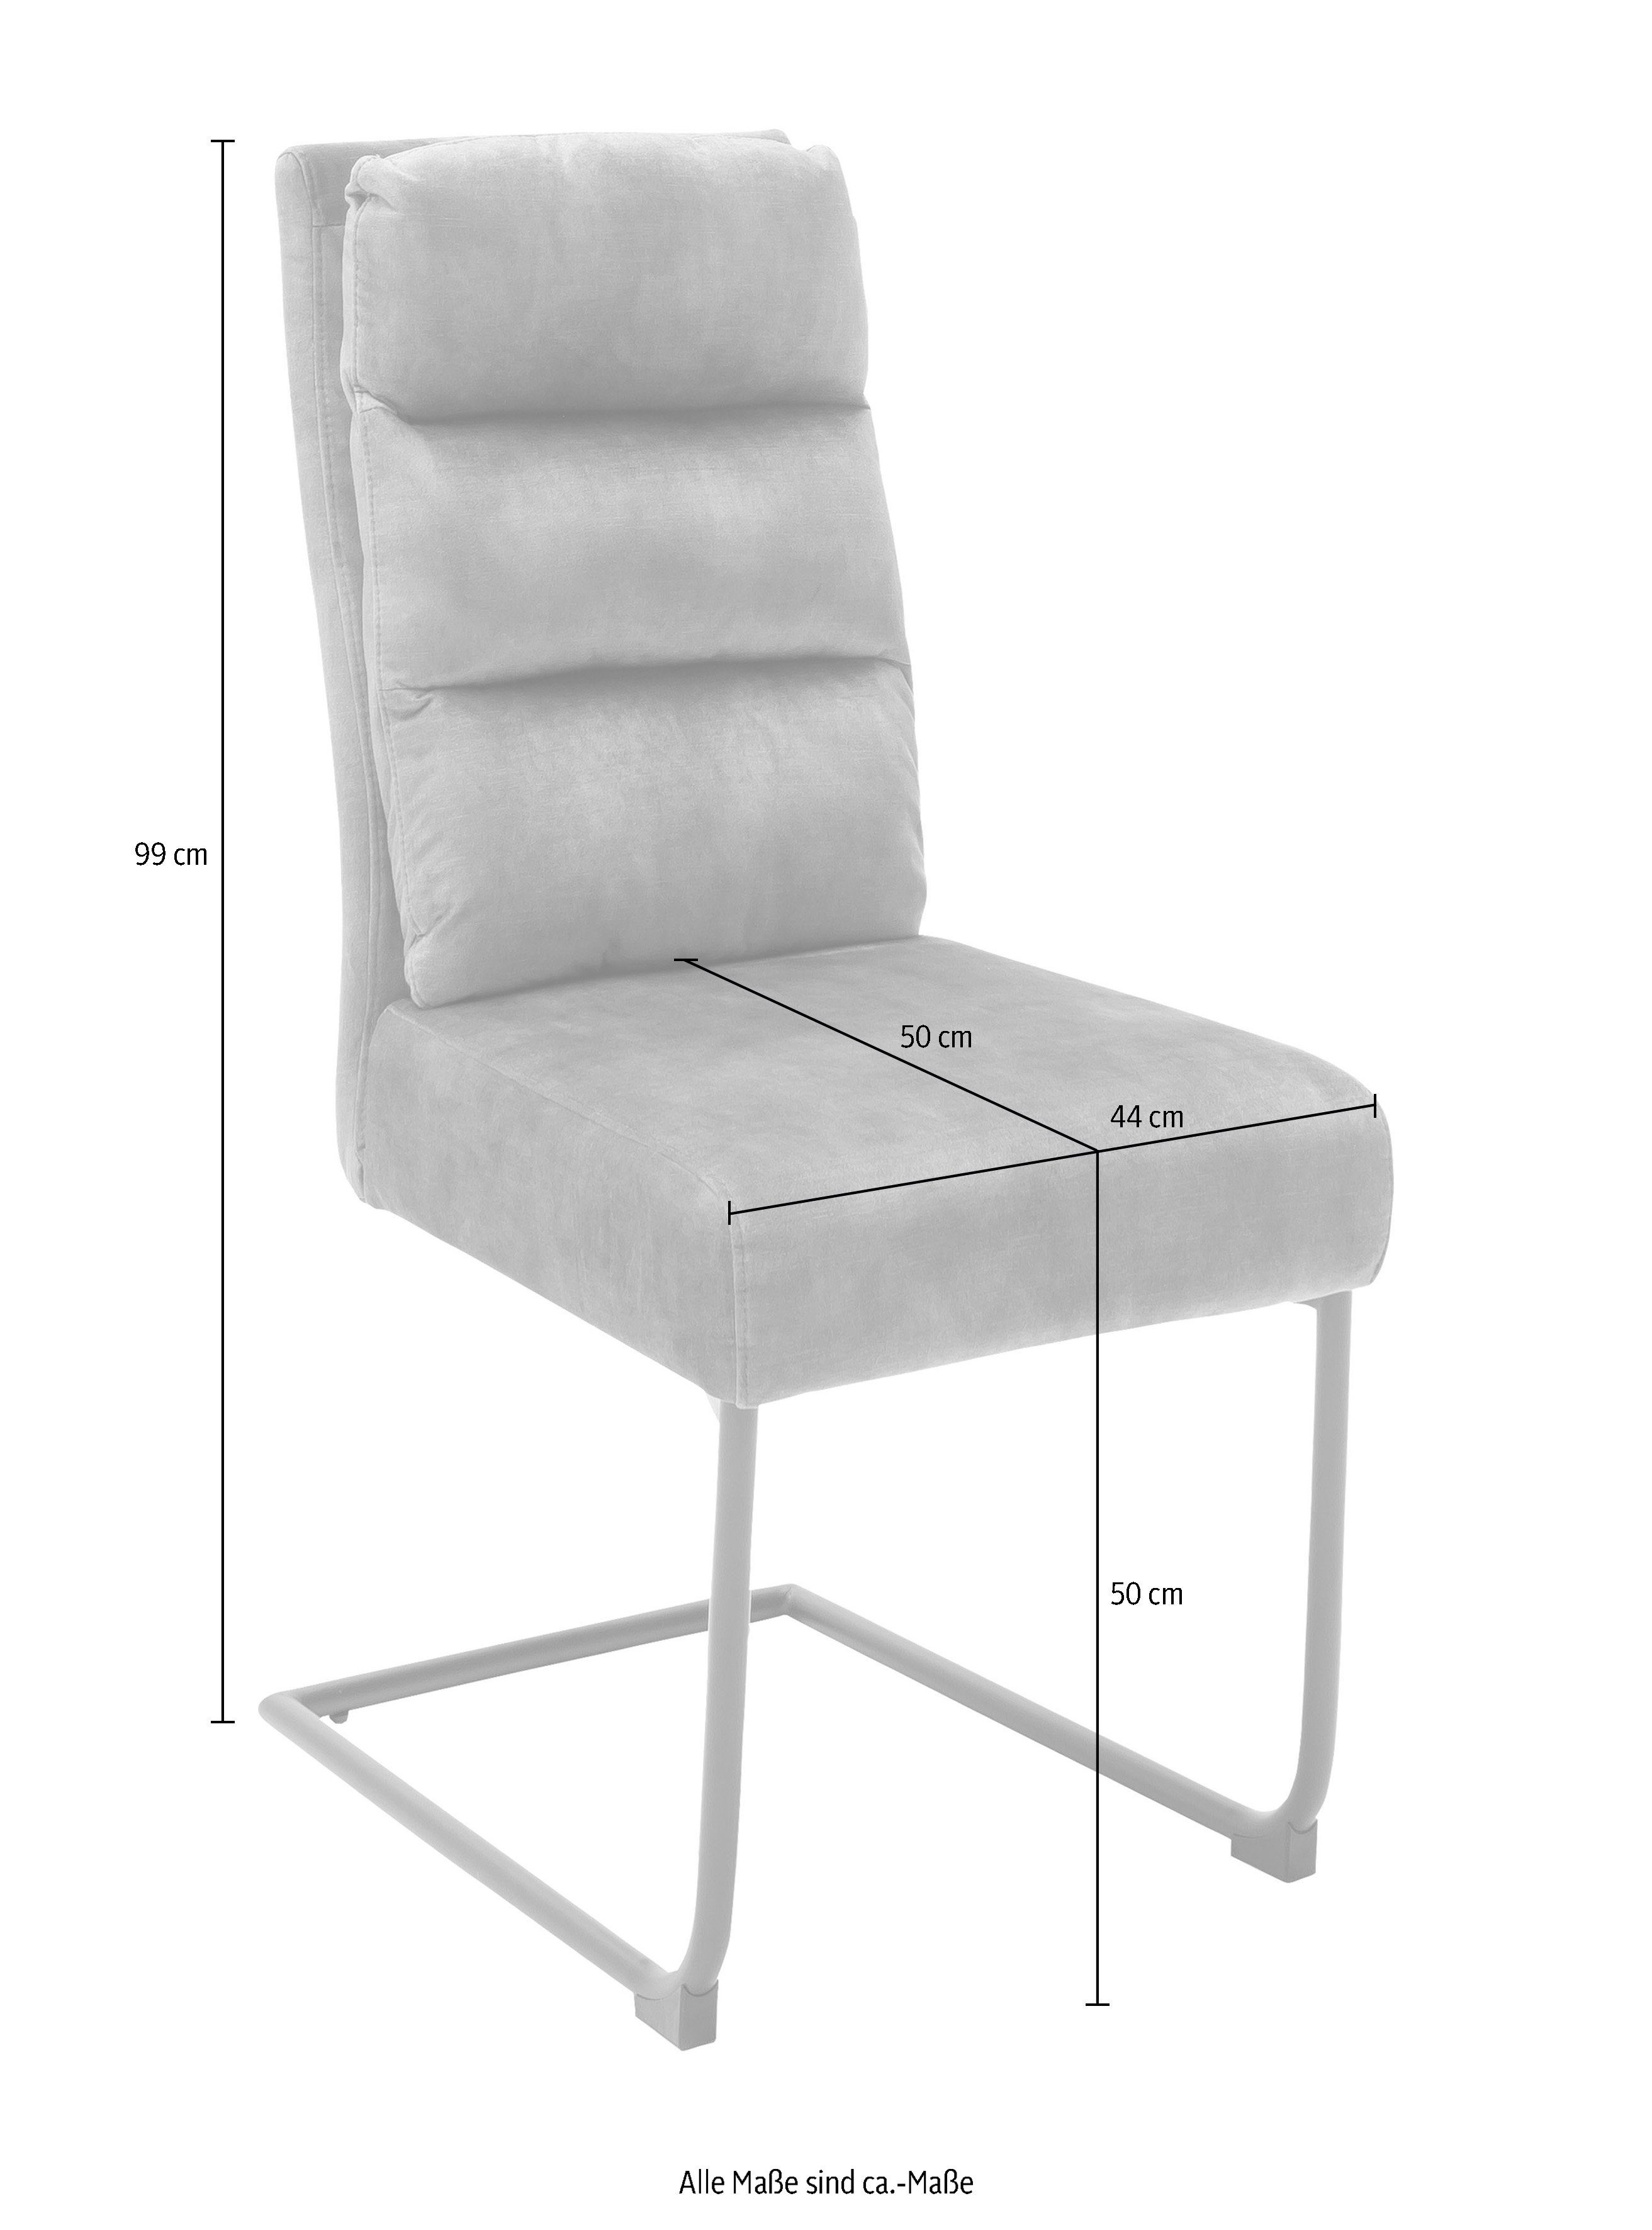 MCA furniture bis Vintagelook, 120 Lampang Rostbraun im kg mit 2 belastbar Rostbraun 2er Set, Stuhl (Set, | Stoffbezug St), Freischwinger